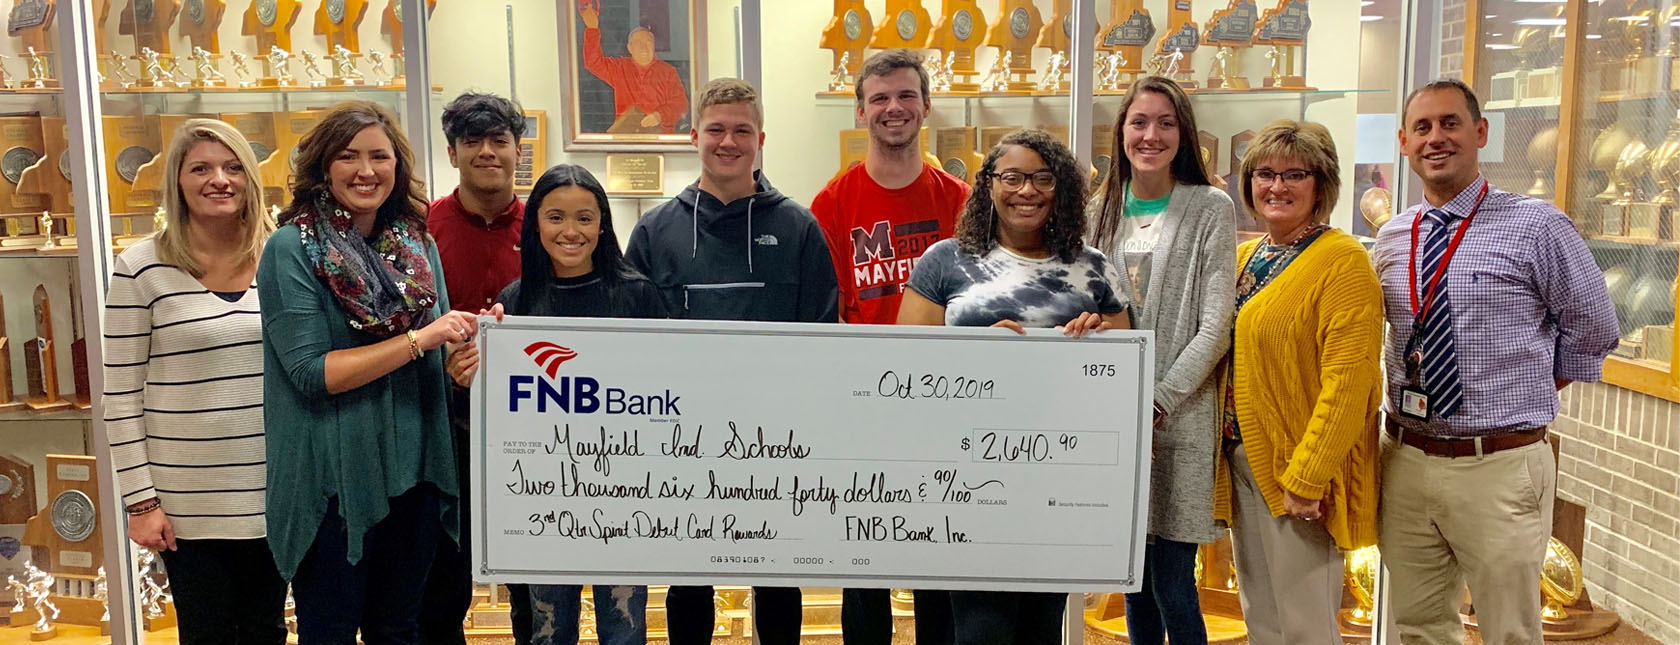 FNB Donates over $19700 to local schools through spirit debit card program